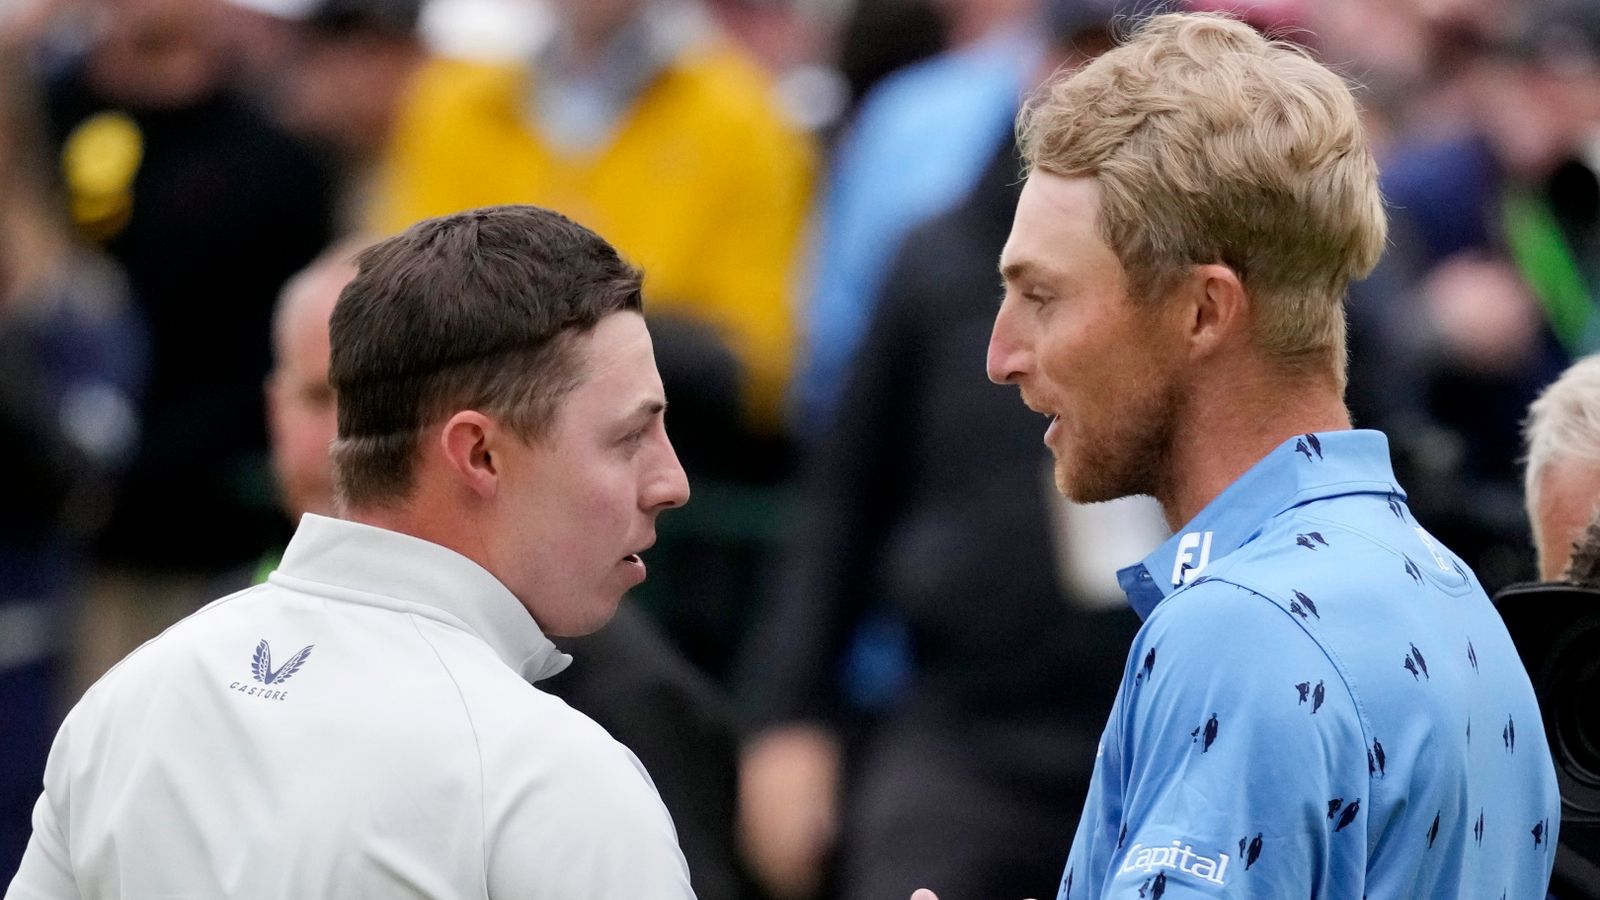 Matt Fitzpatrick ‘deserved to win’ US Open: How golf reacted to Englishman’s major breakthrough